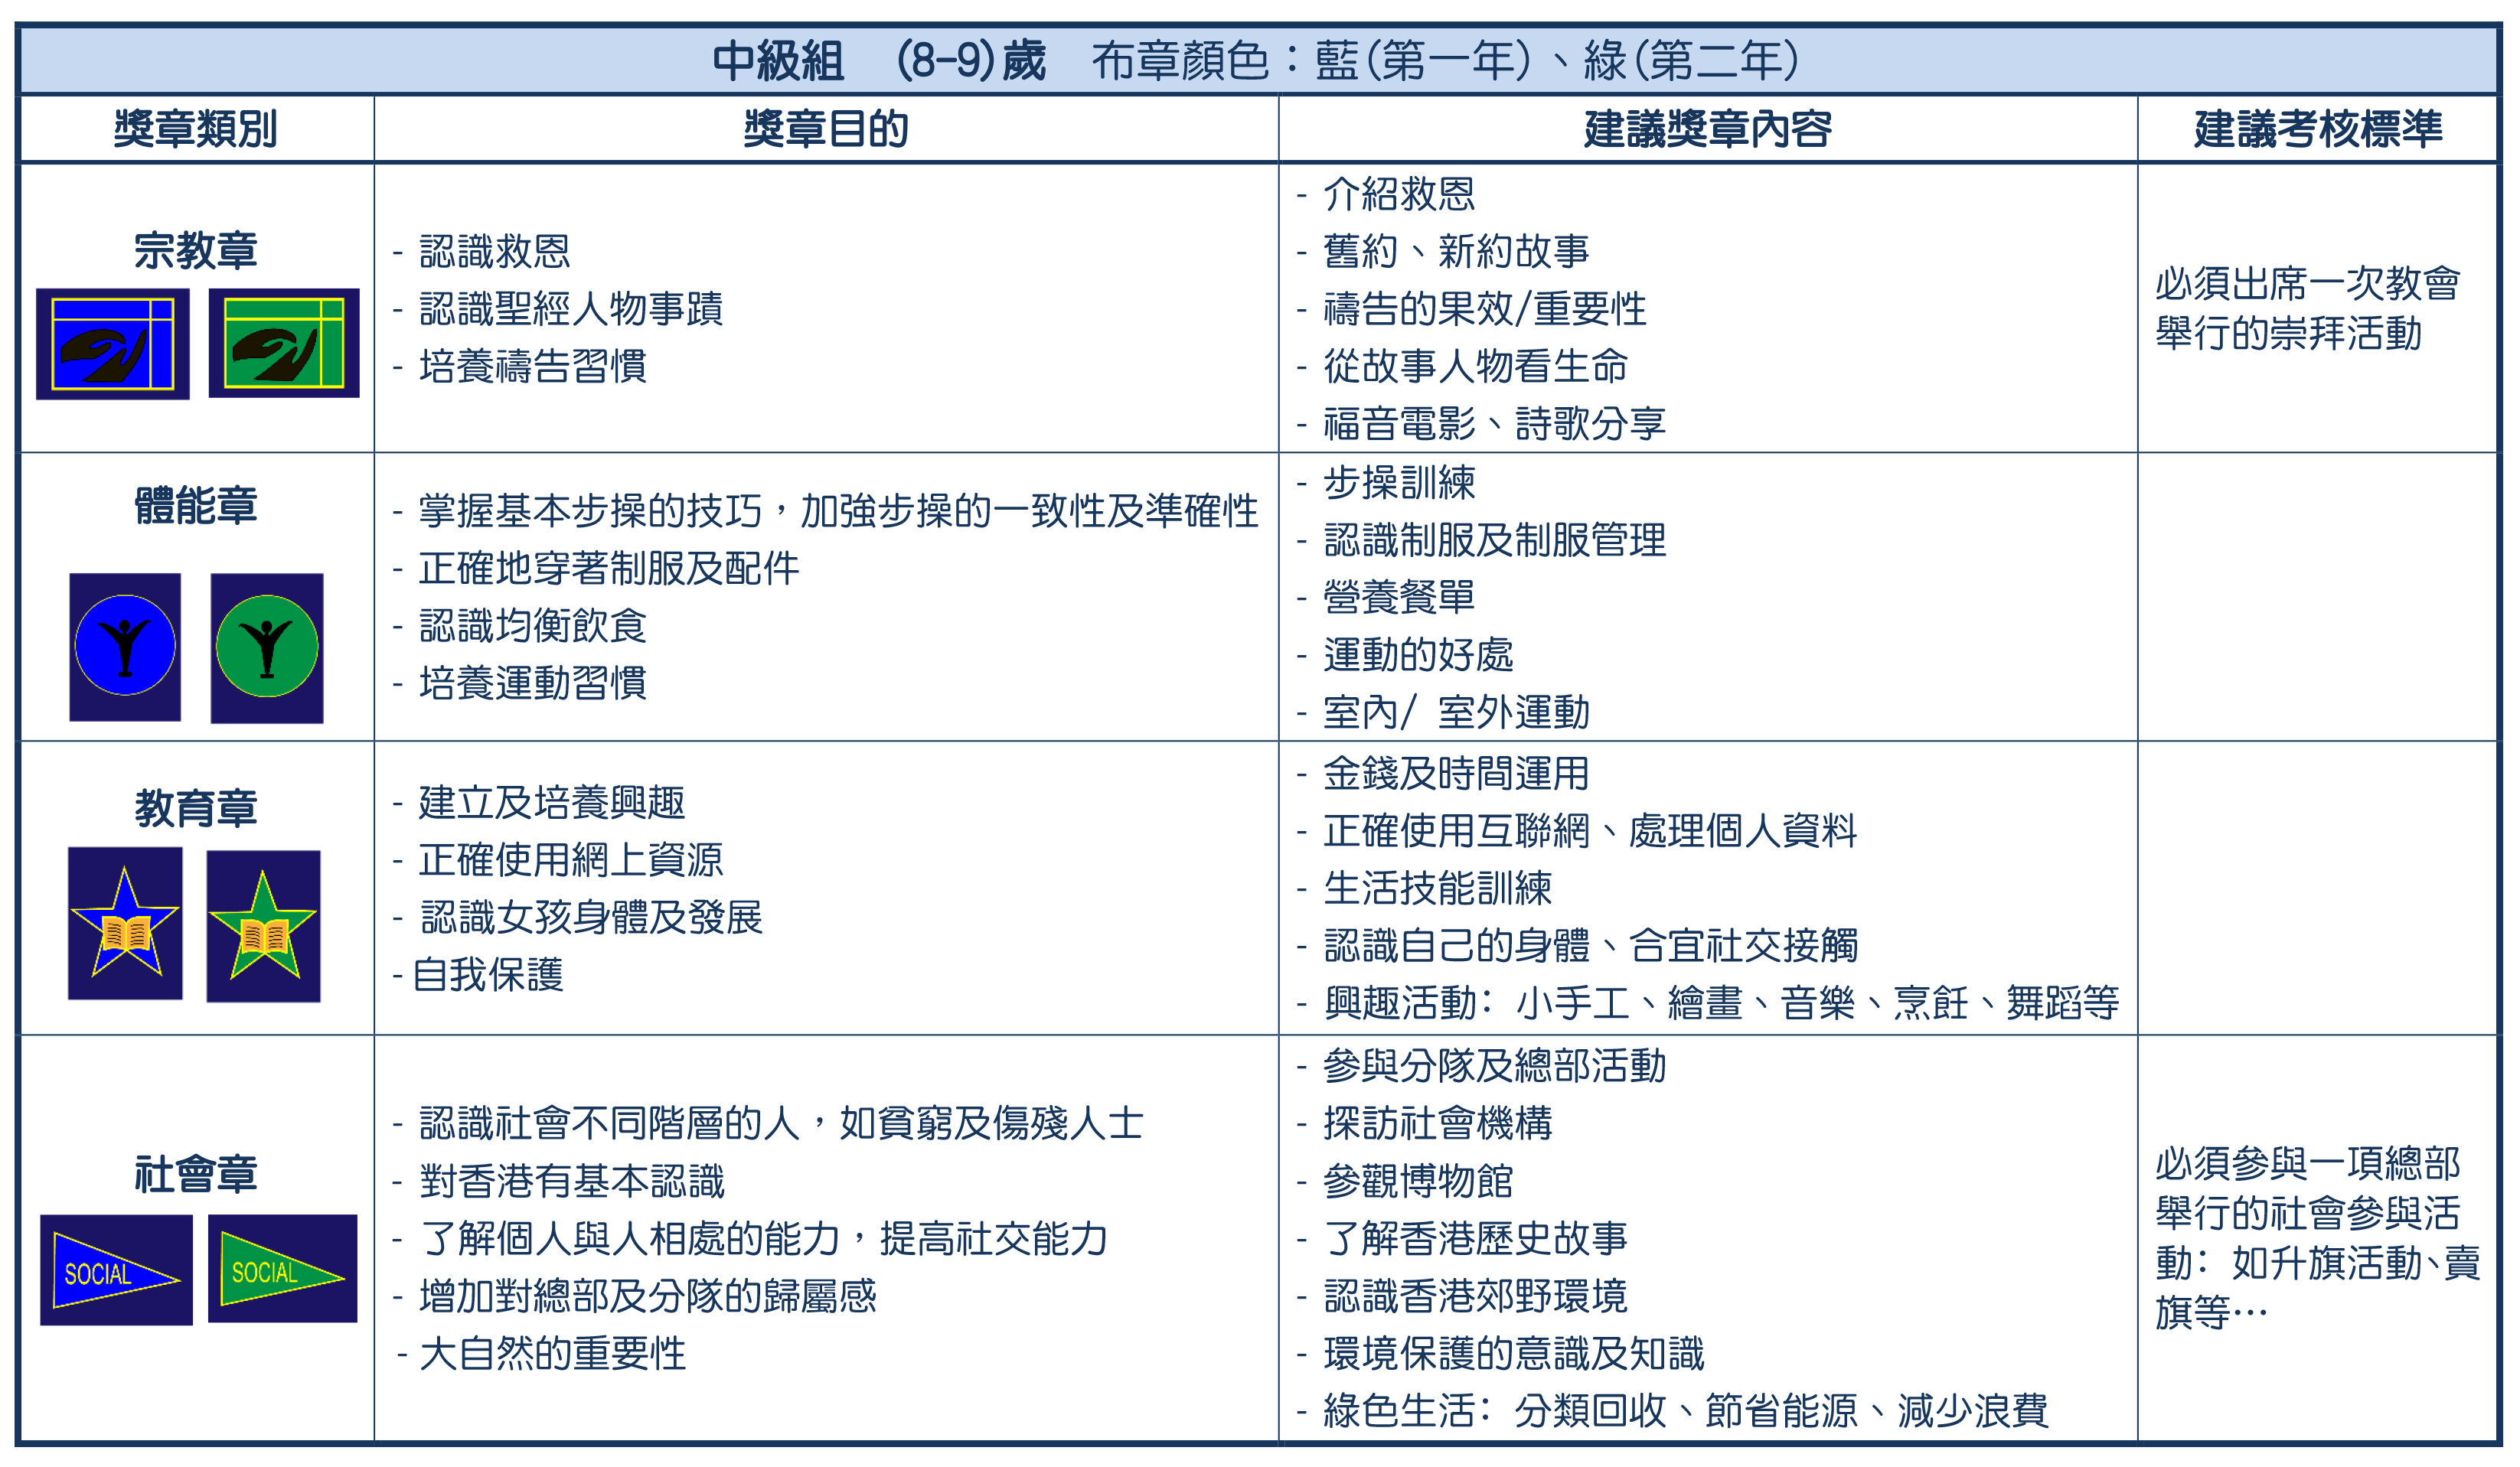 6- 獎章制度-中級組(revised 2020829)